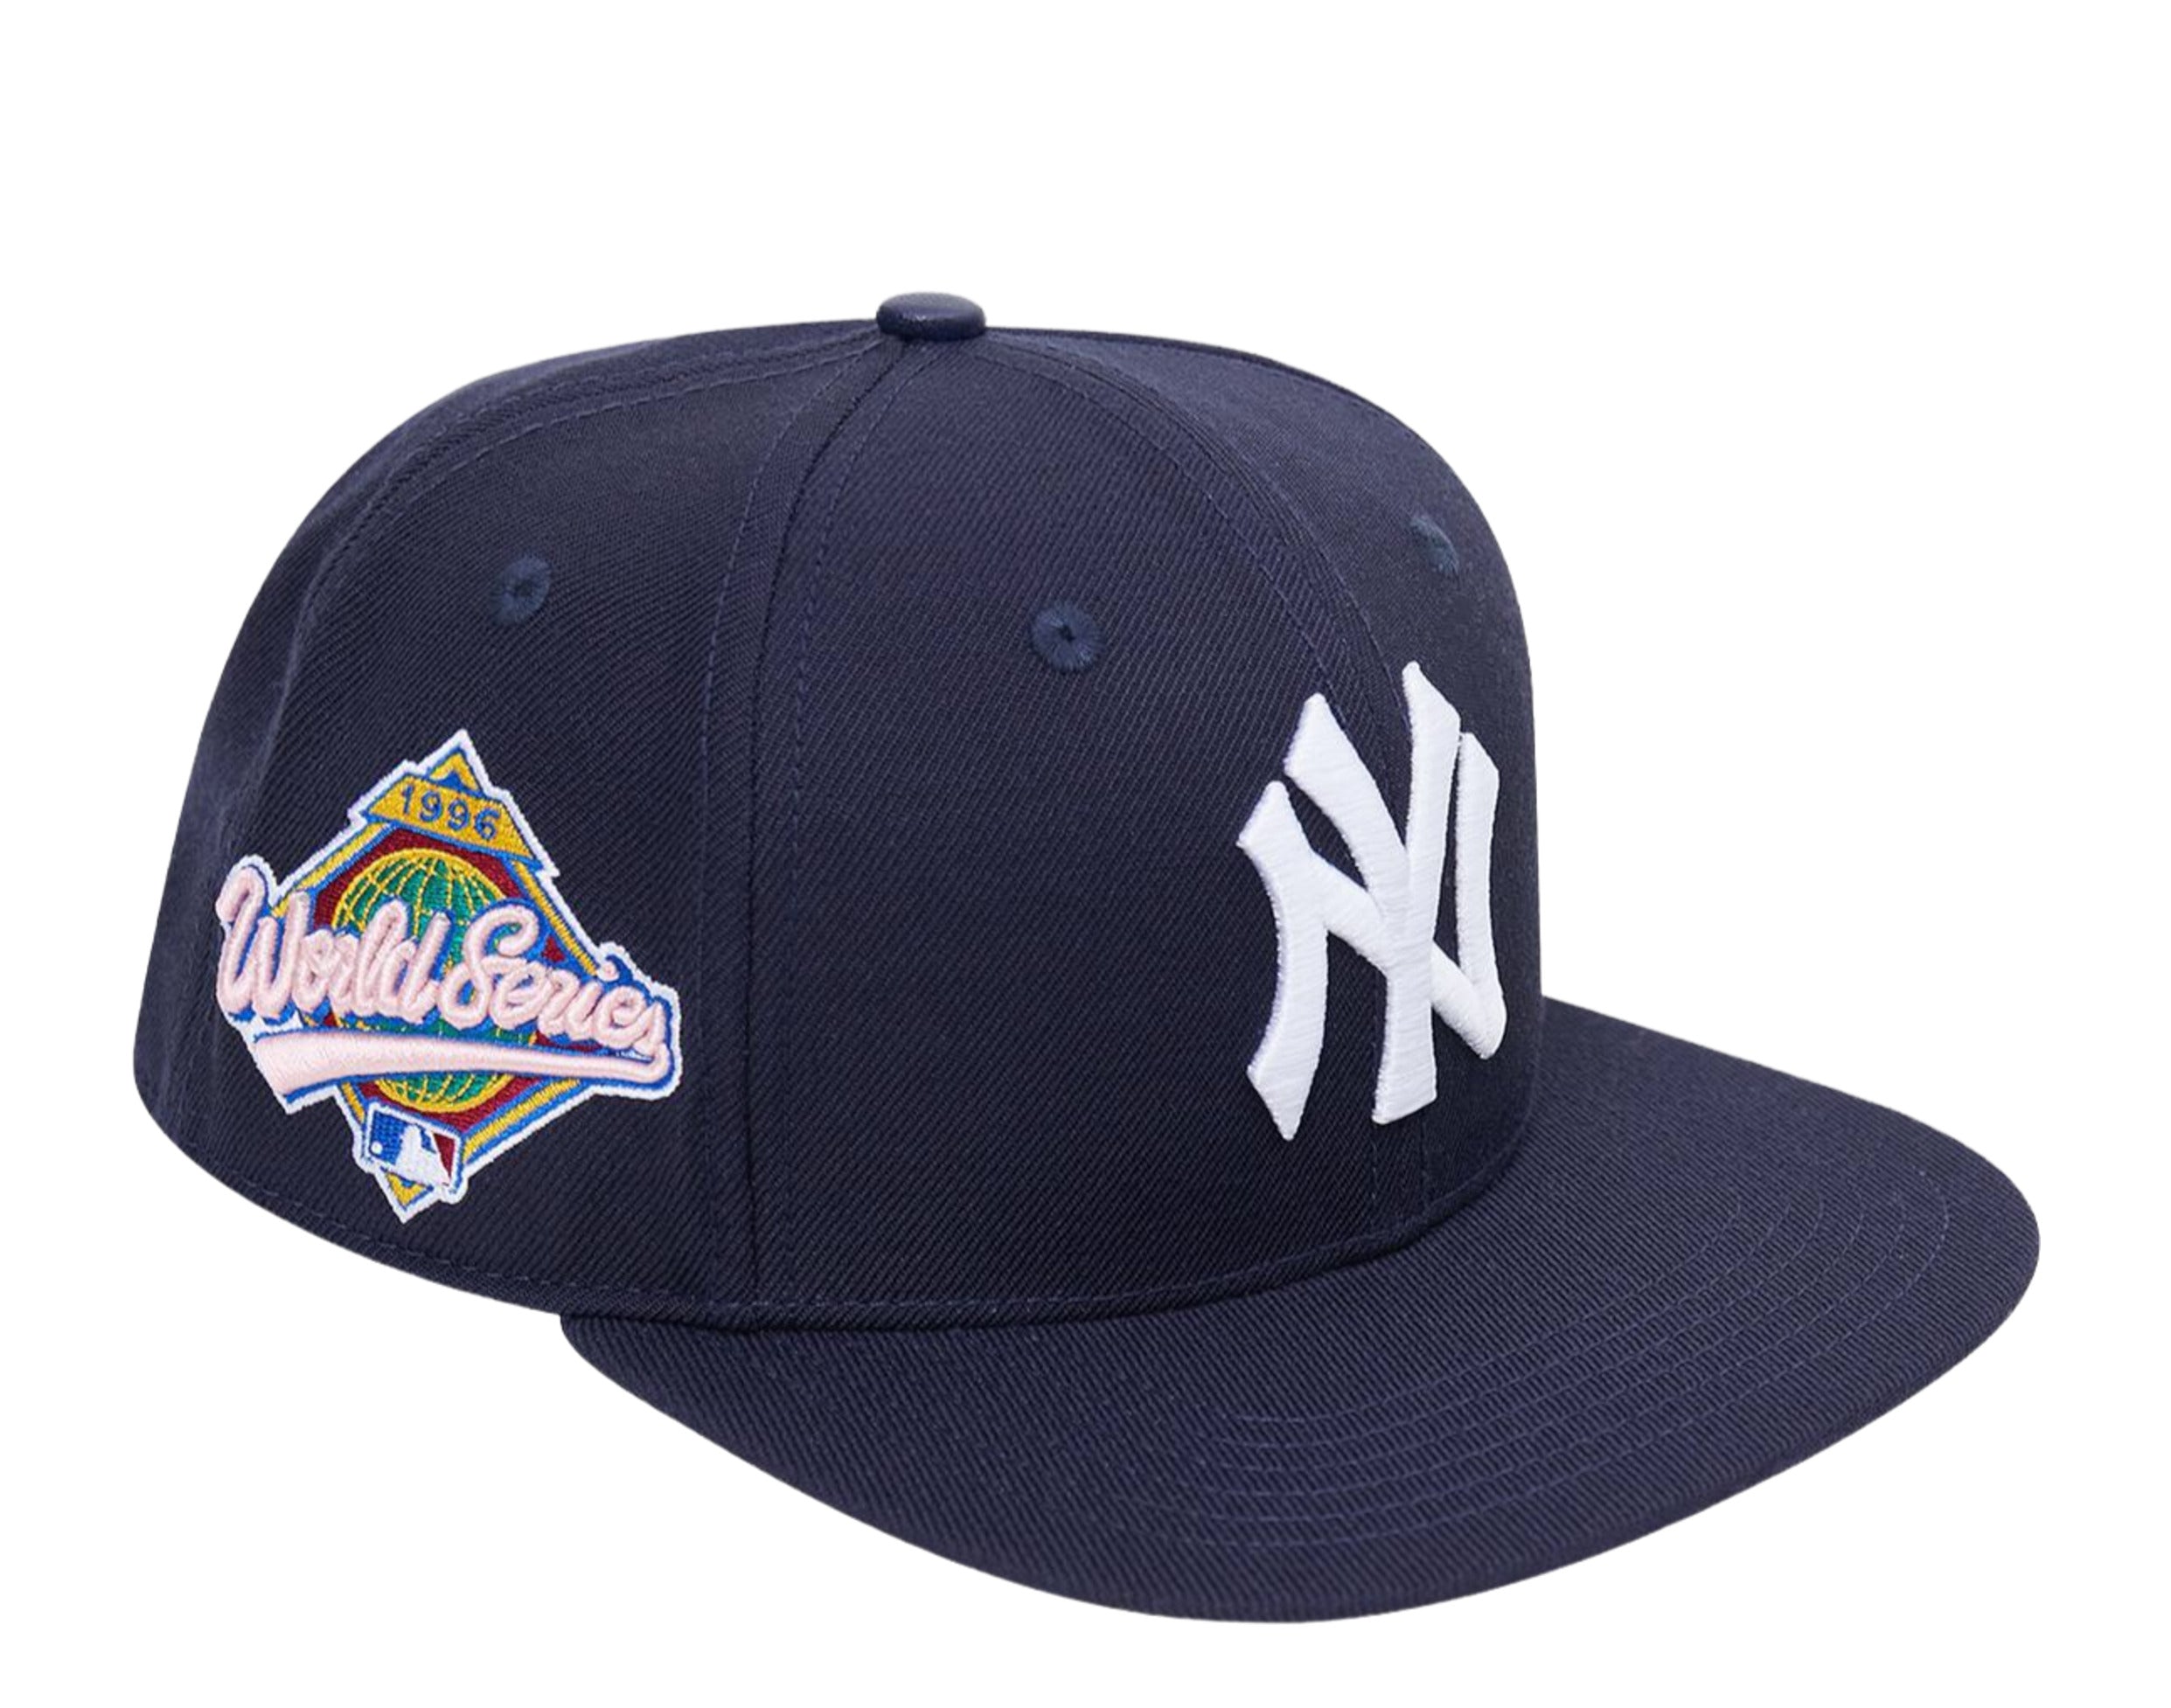 Yankees Wear BP Caps Against Detroit – SportsLogos.Net News